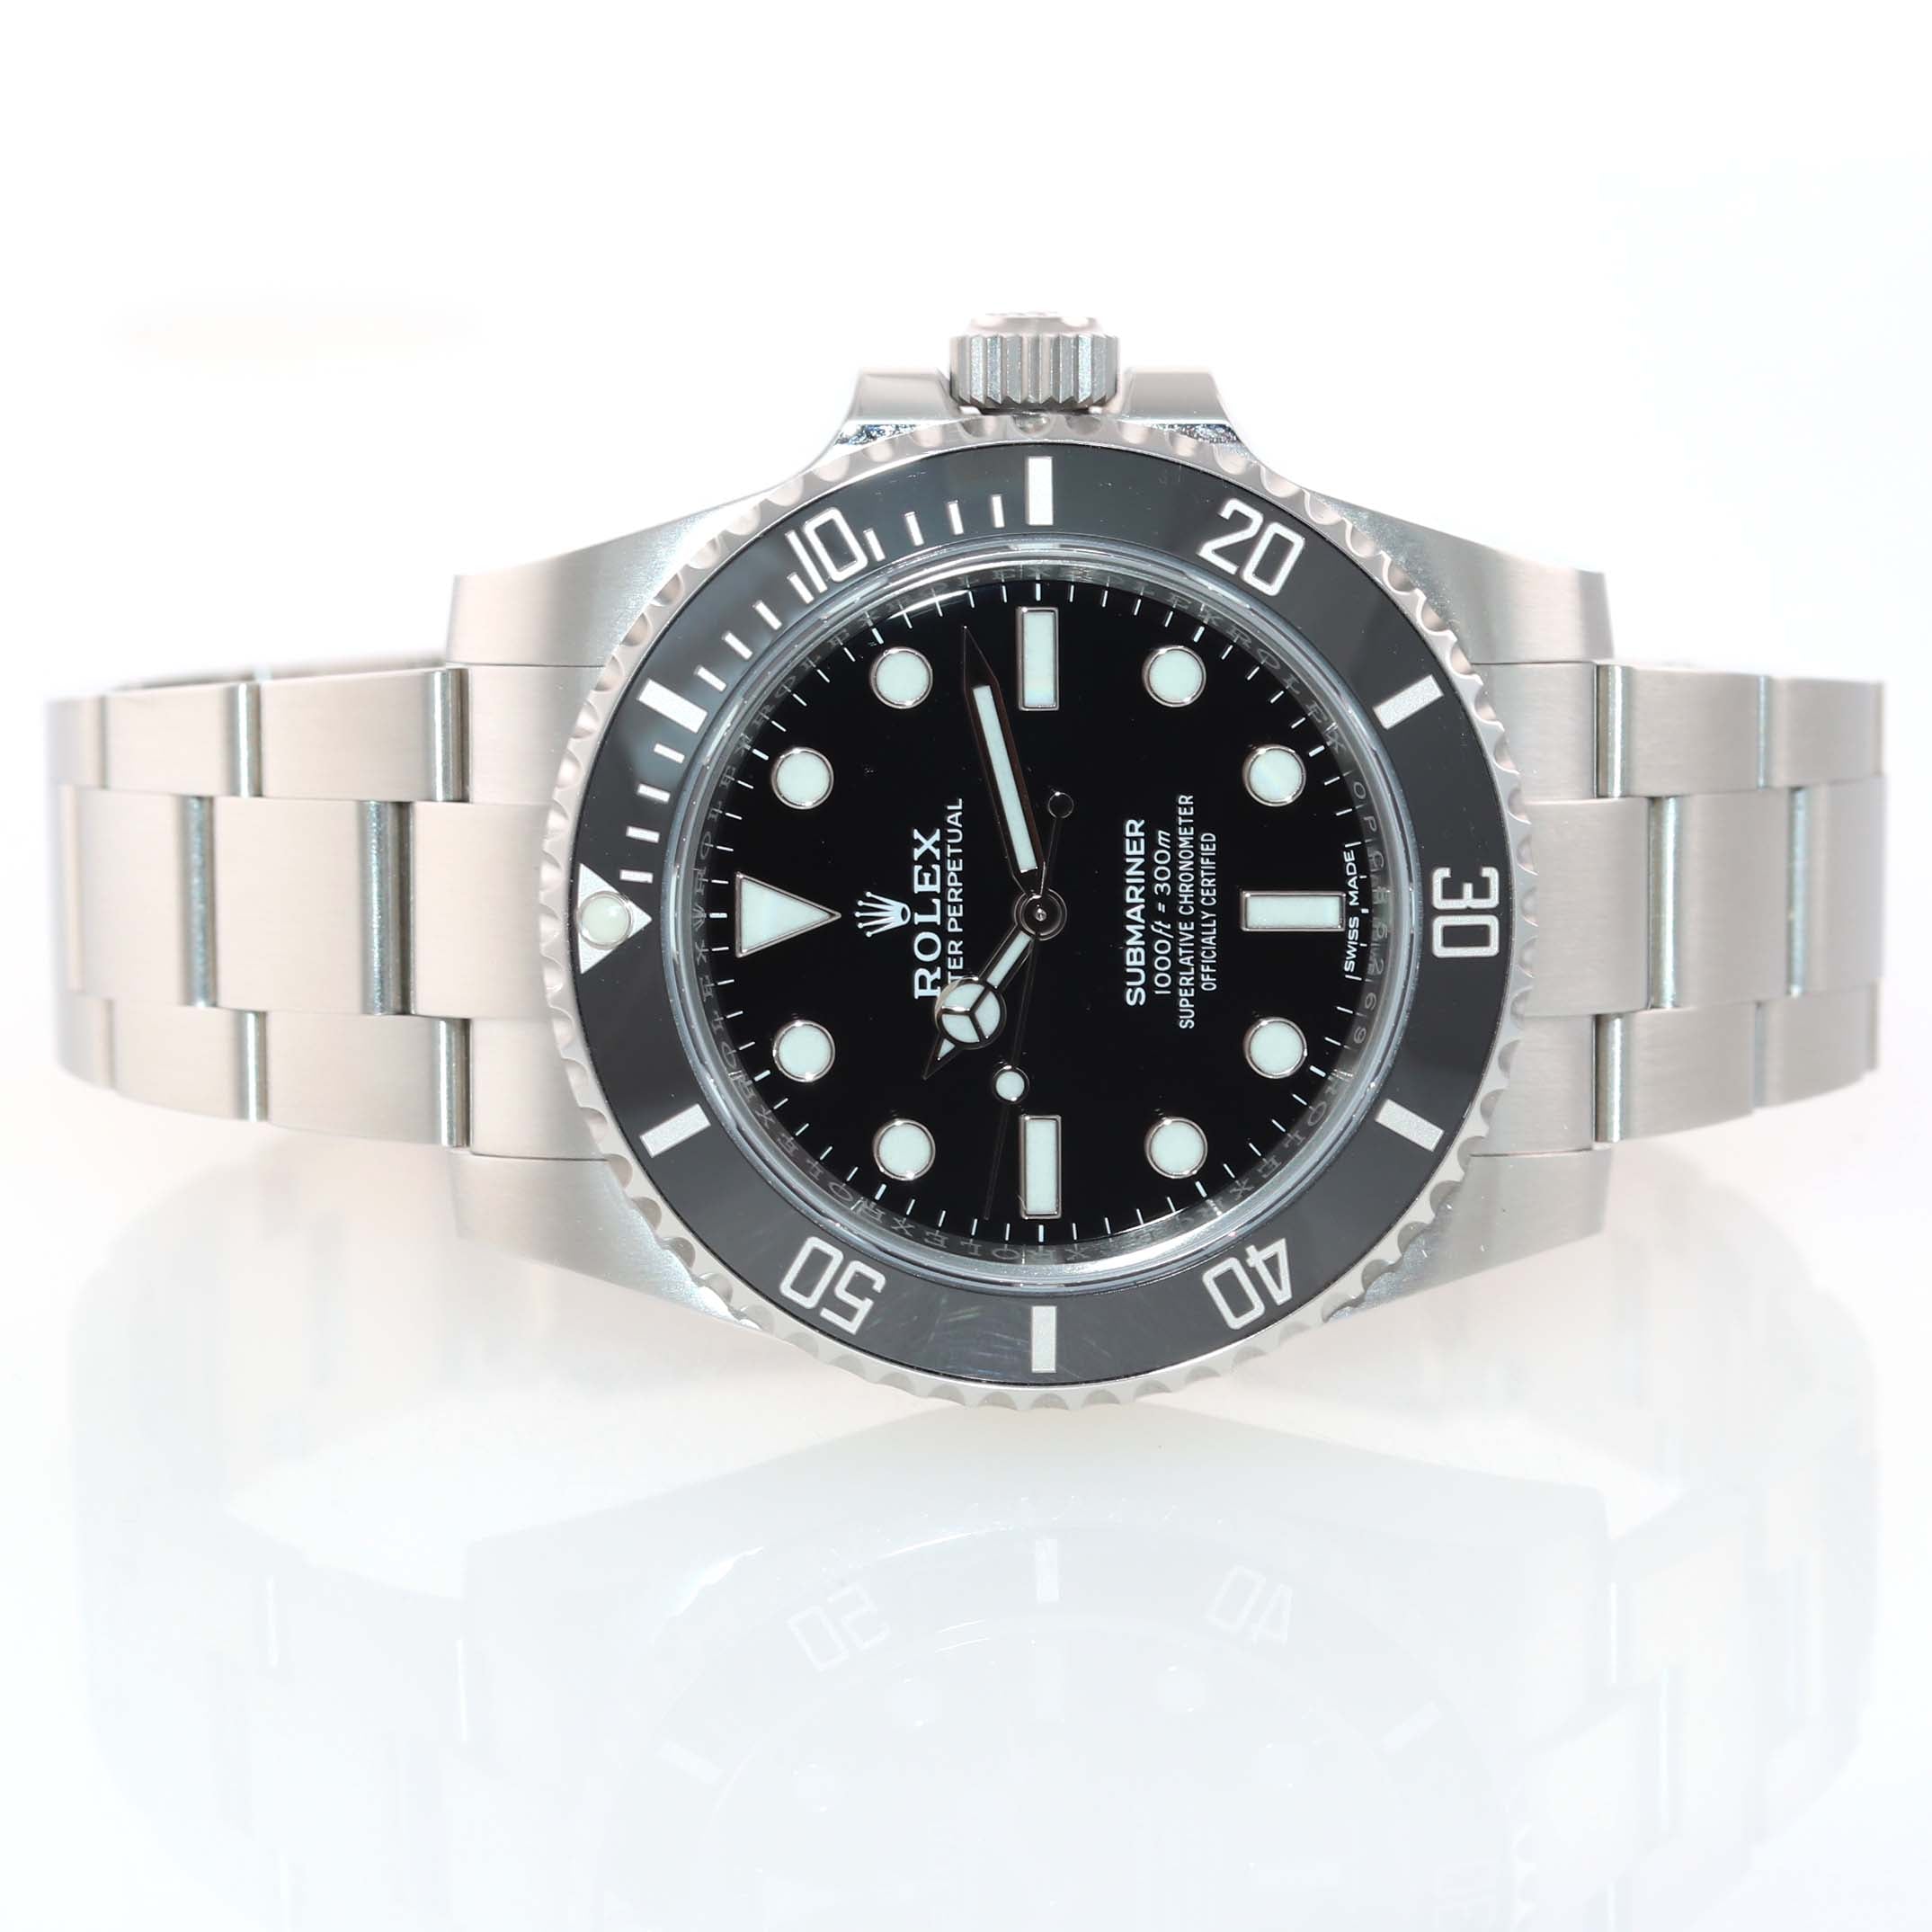 NEW 2018 PAPERS Rolex Submariner No-Date 114060 Steel Black Ceramic Watch Box